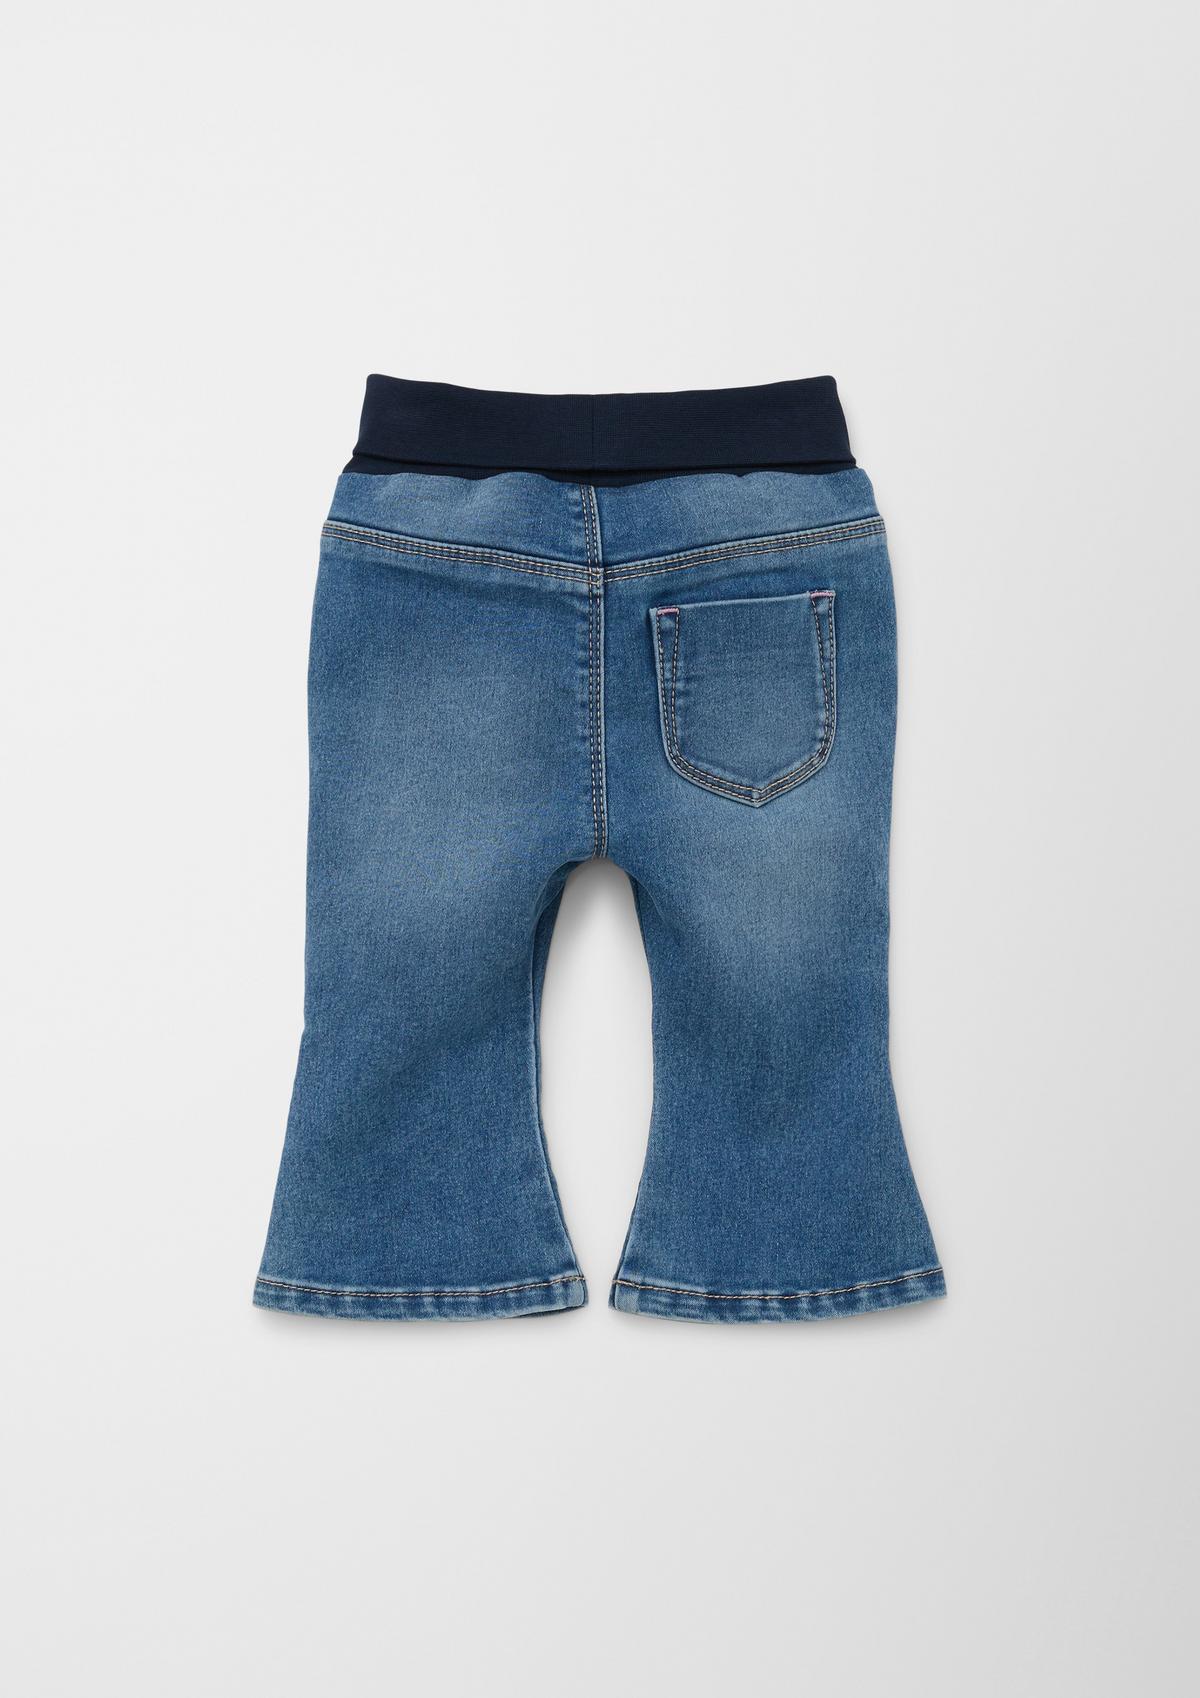 s.Oliver Jeans hlače/kroj Regular Fit/High Rise/Flared Leg/elastičen pas